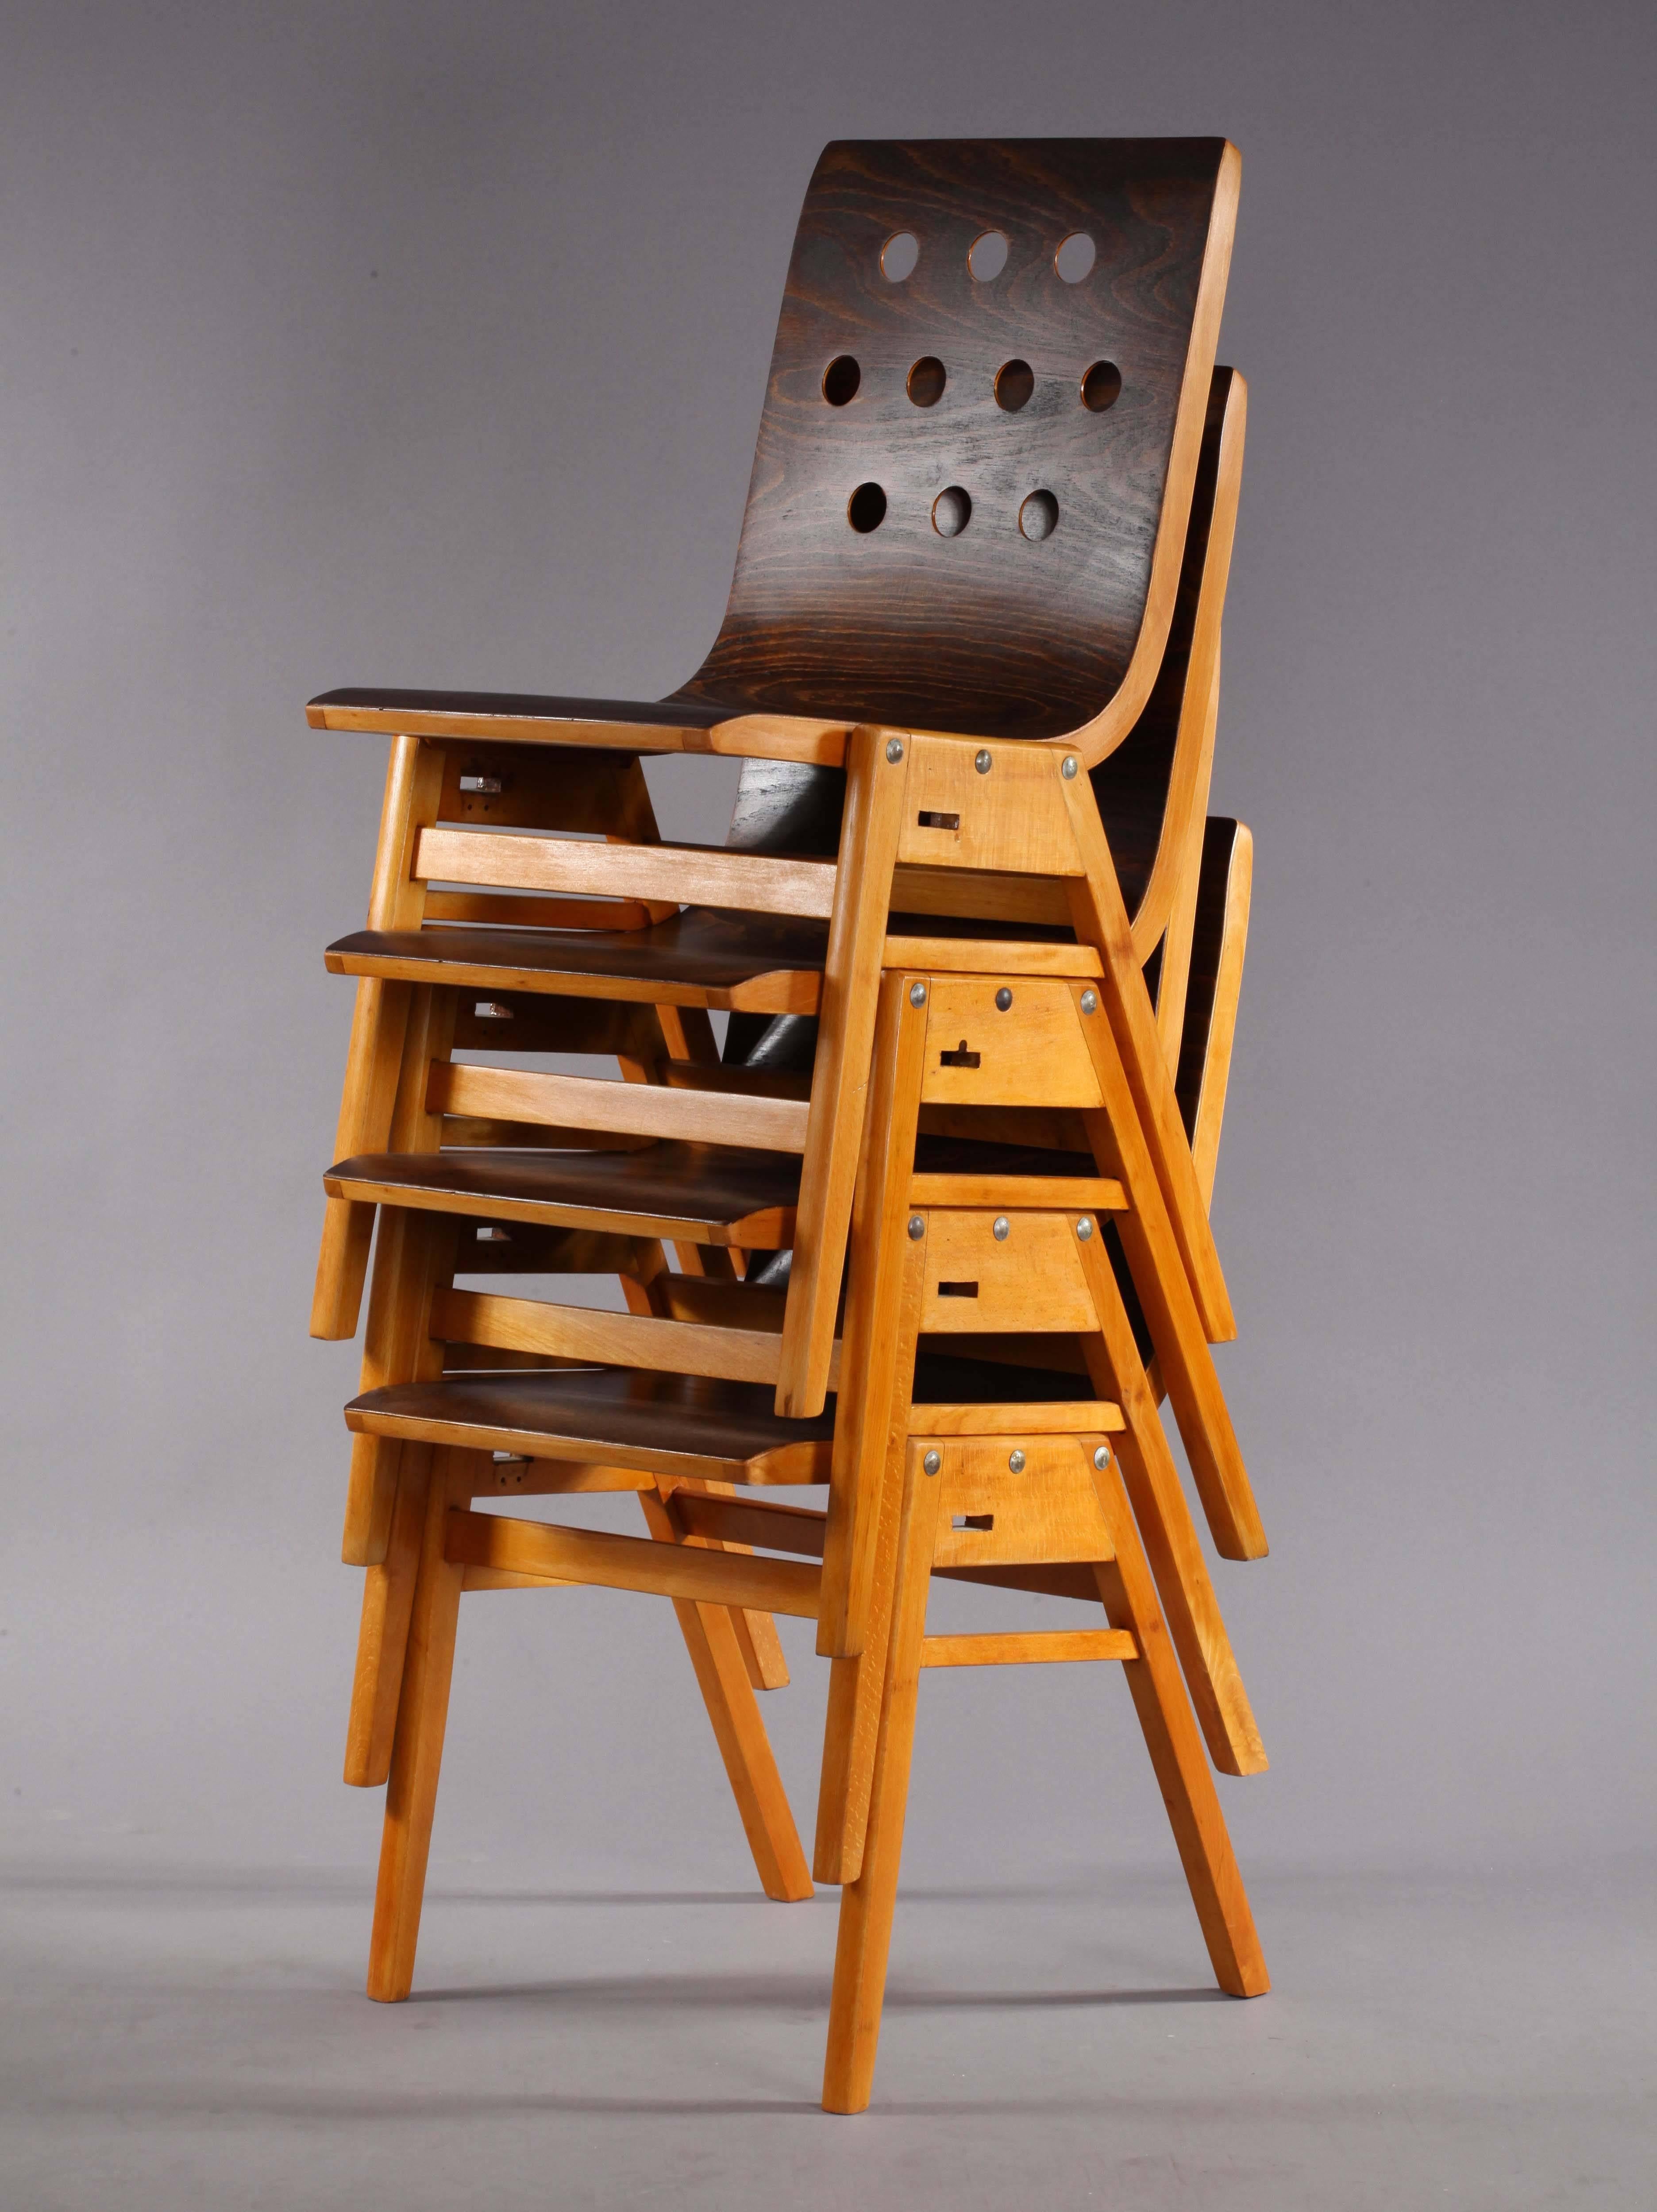 Four stacking chairs,
Roland Rainer,
Vienna 1950,
bent wood.